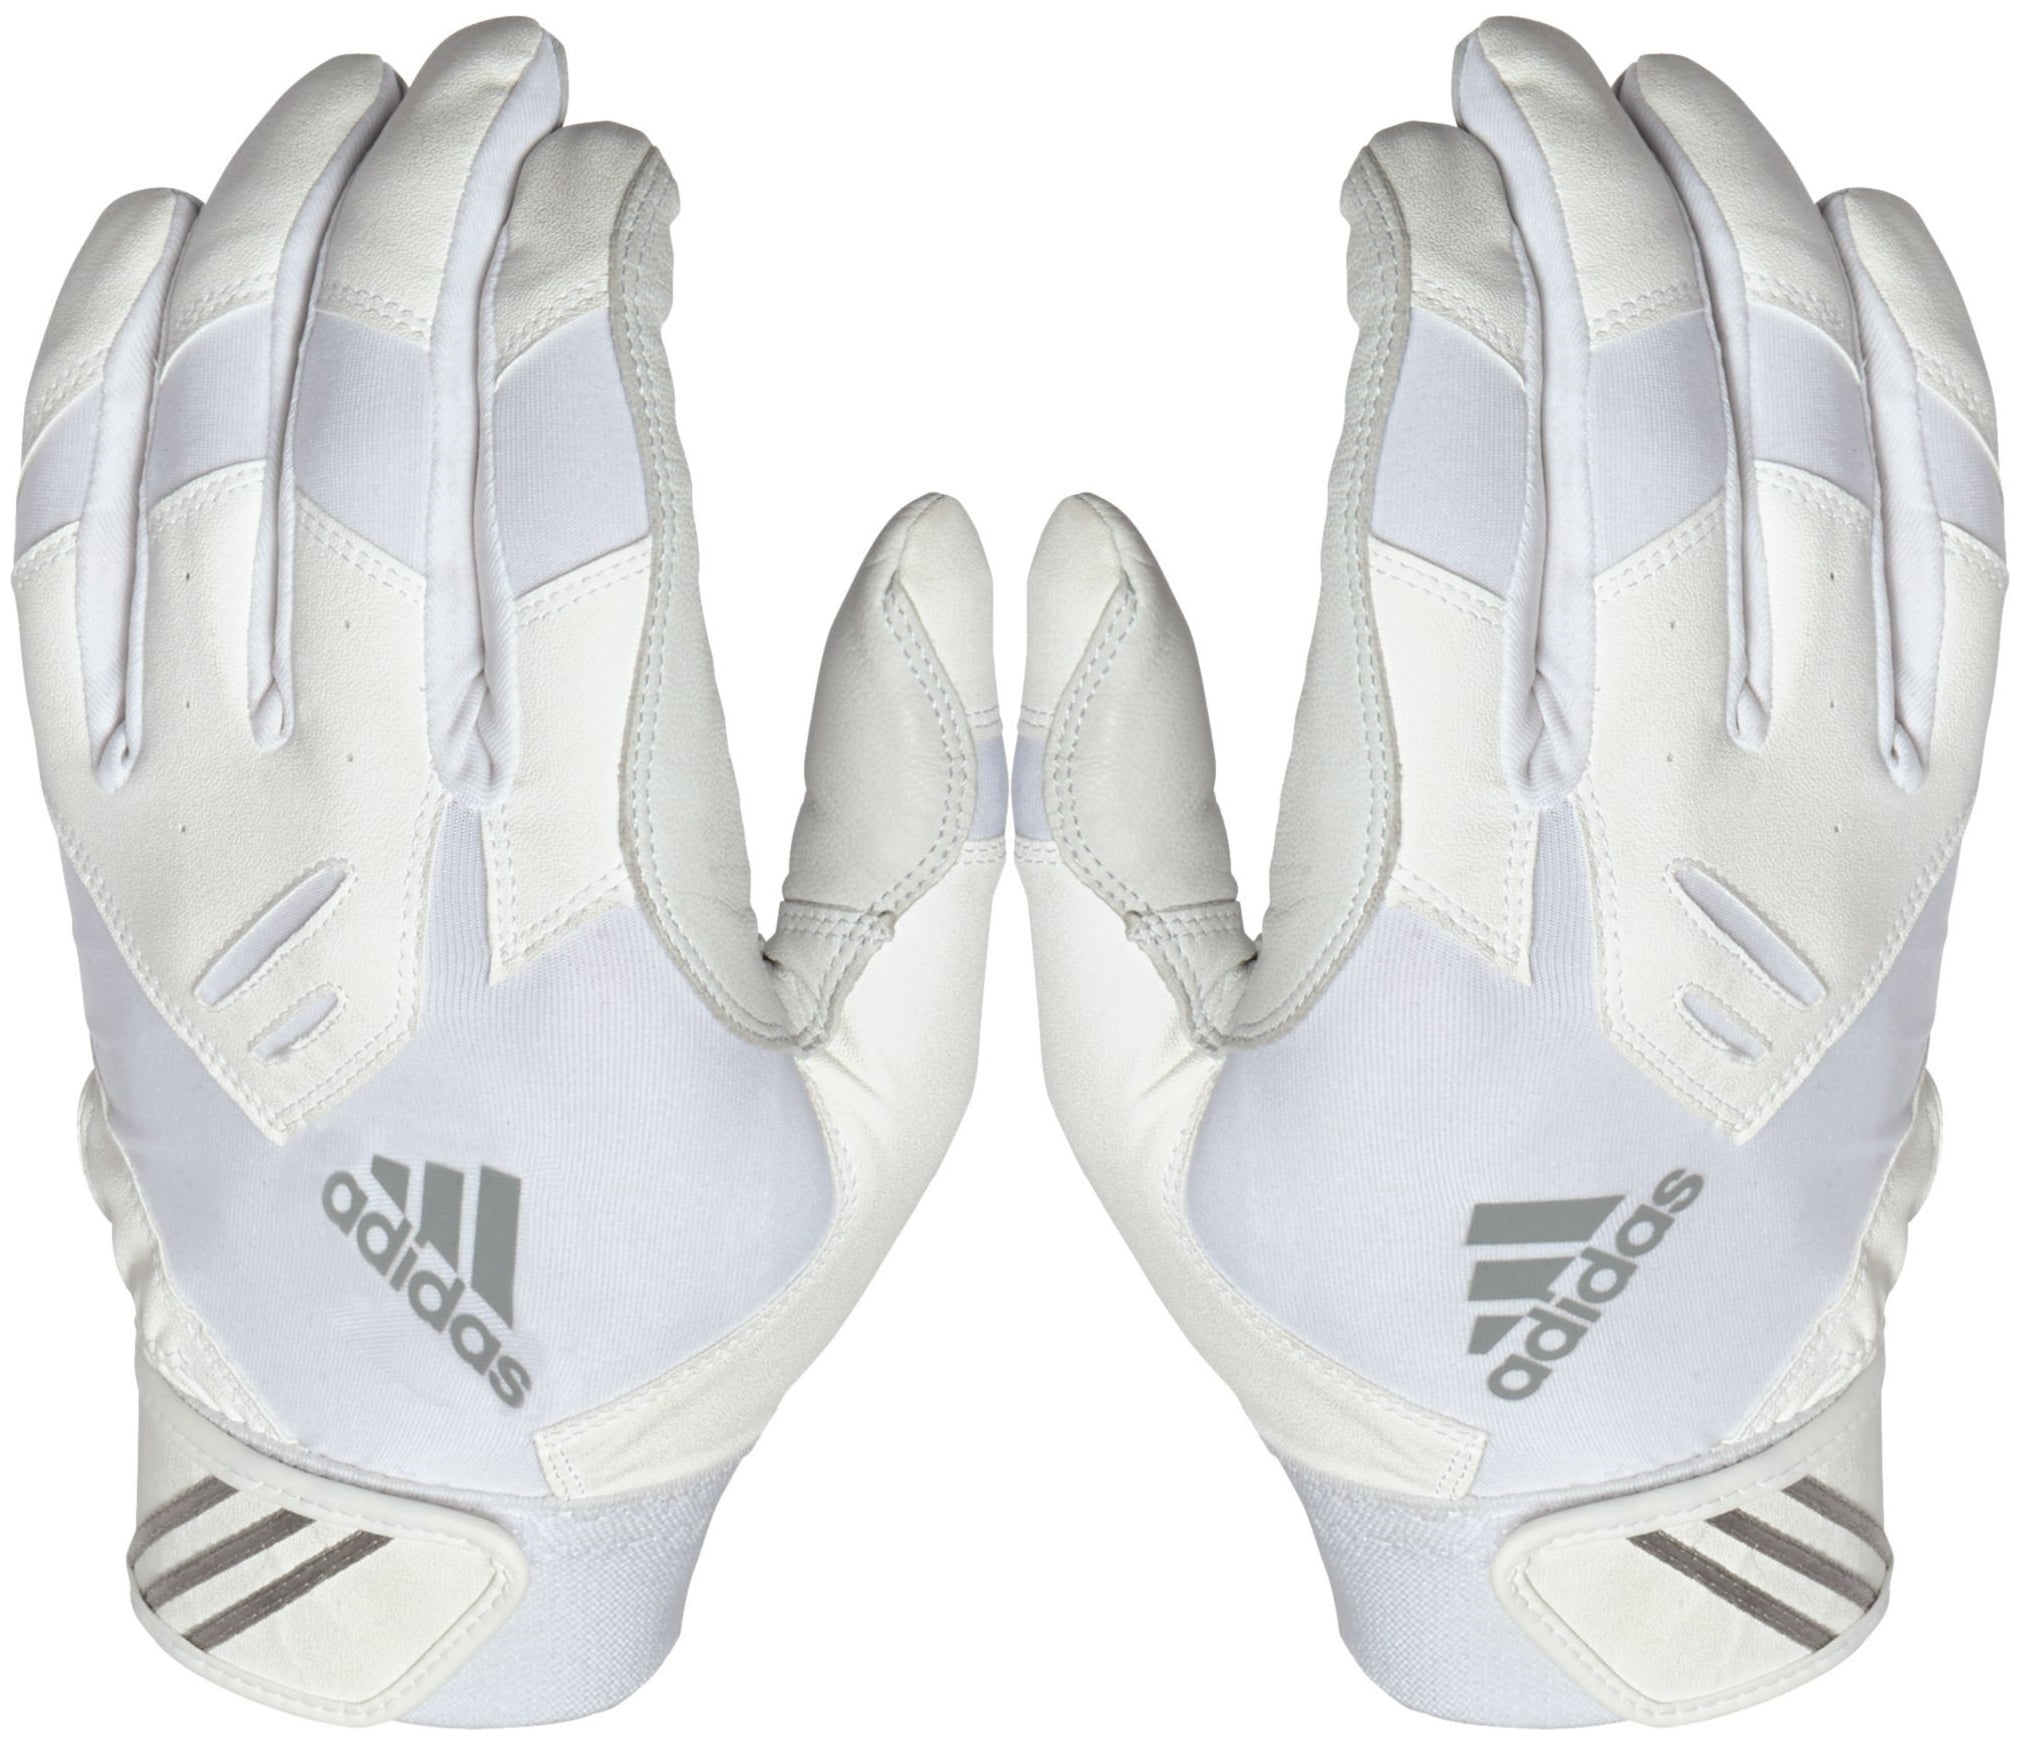 white adidas batting gloves